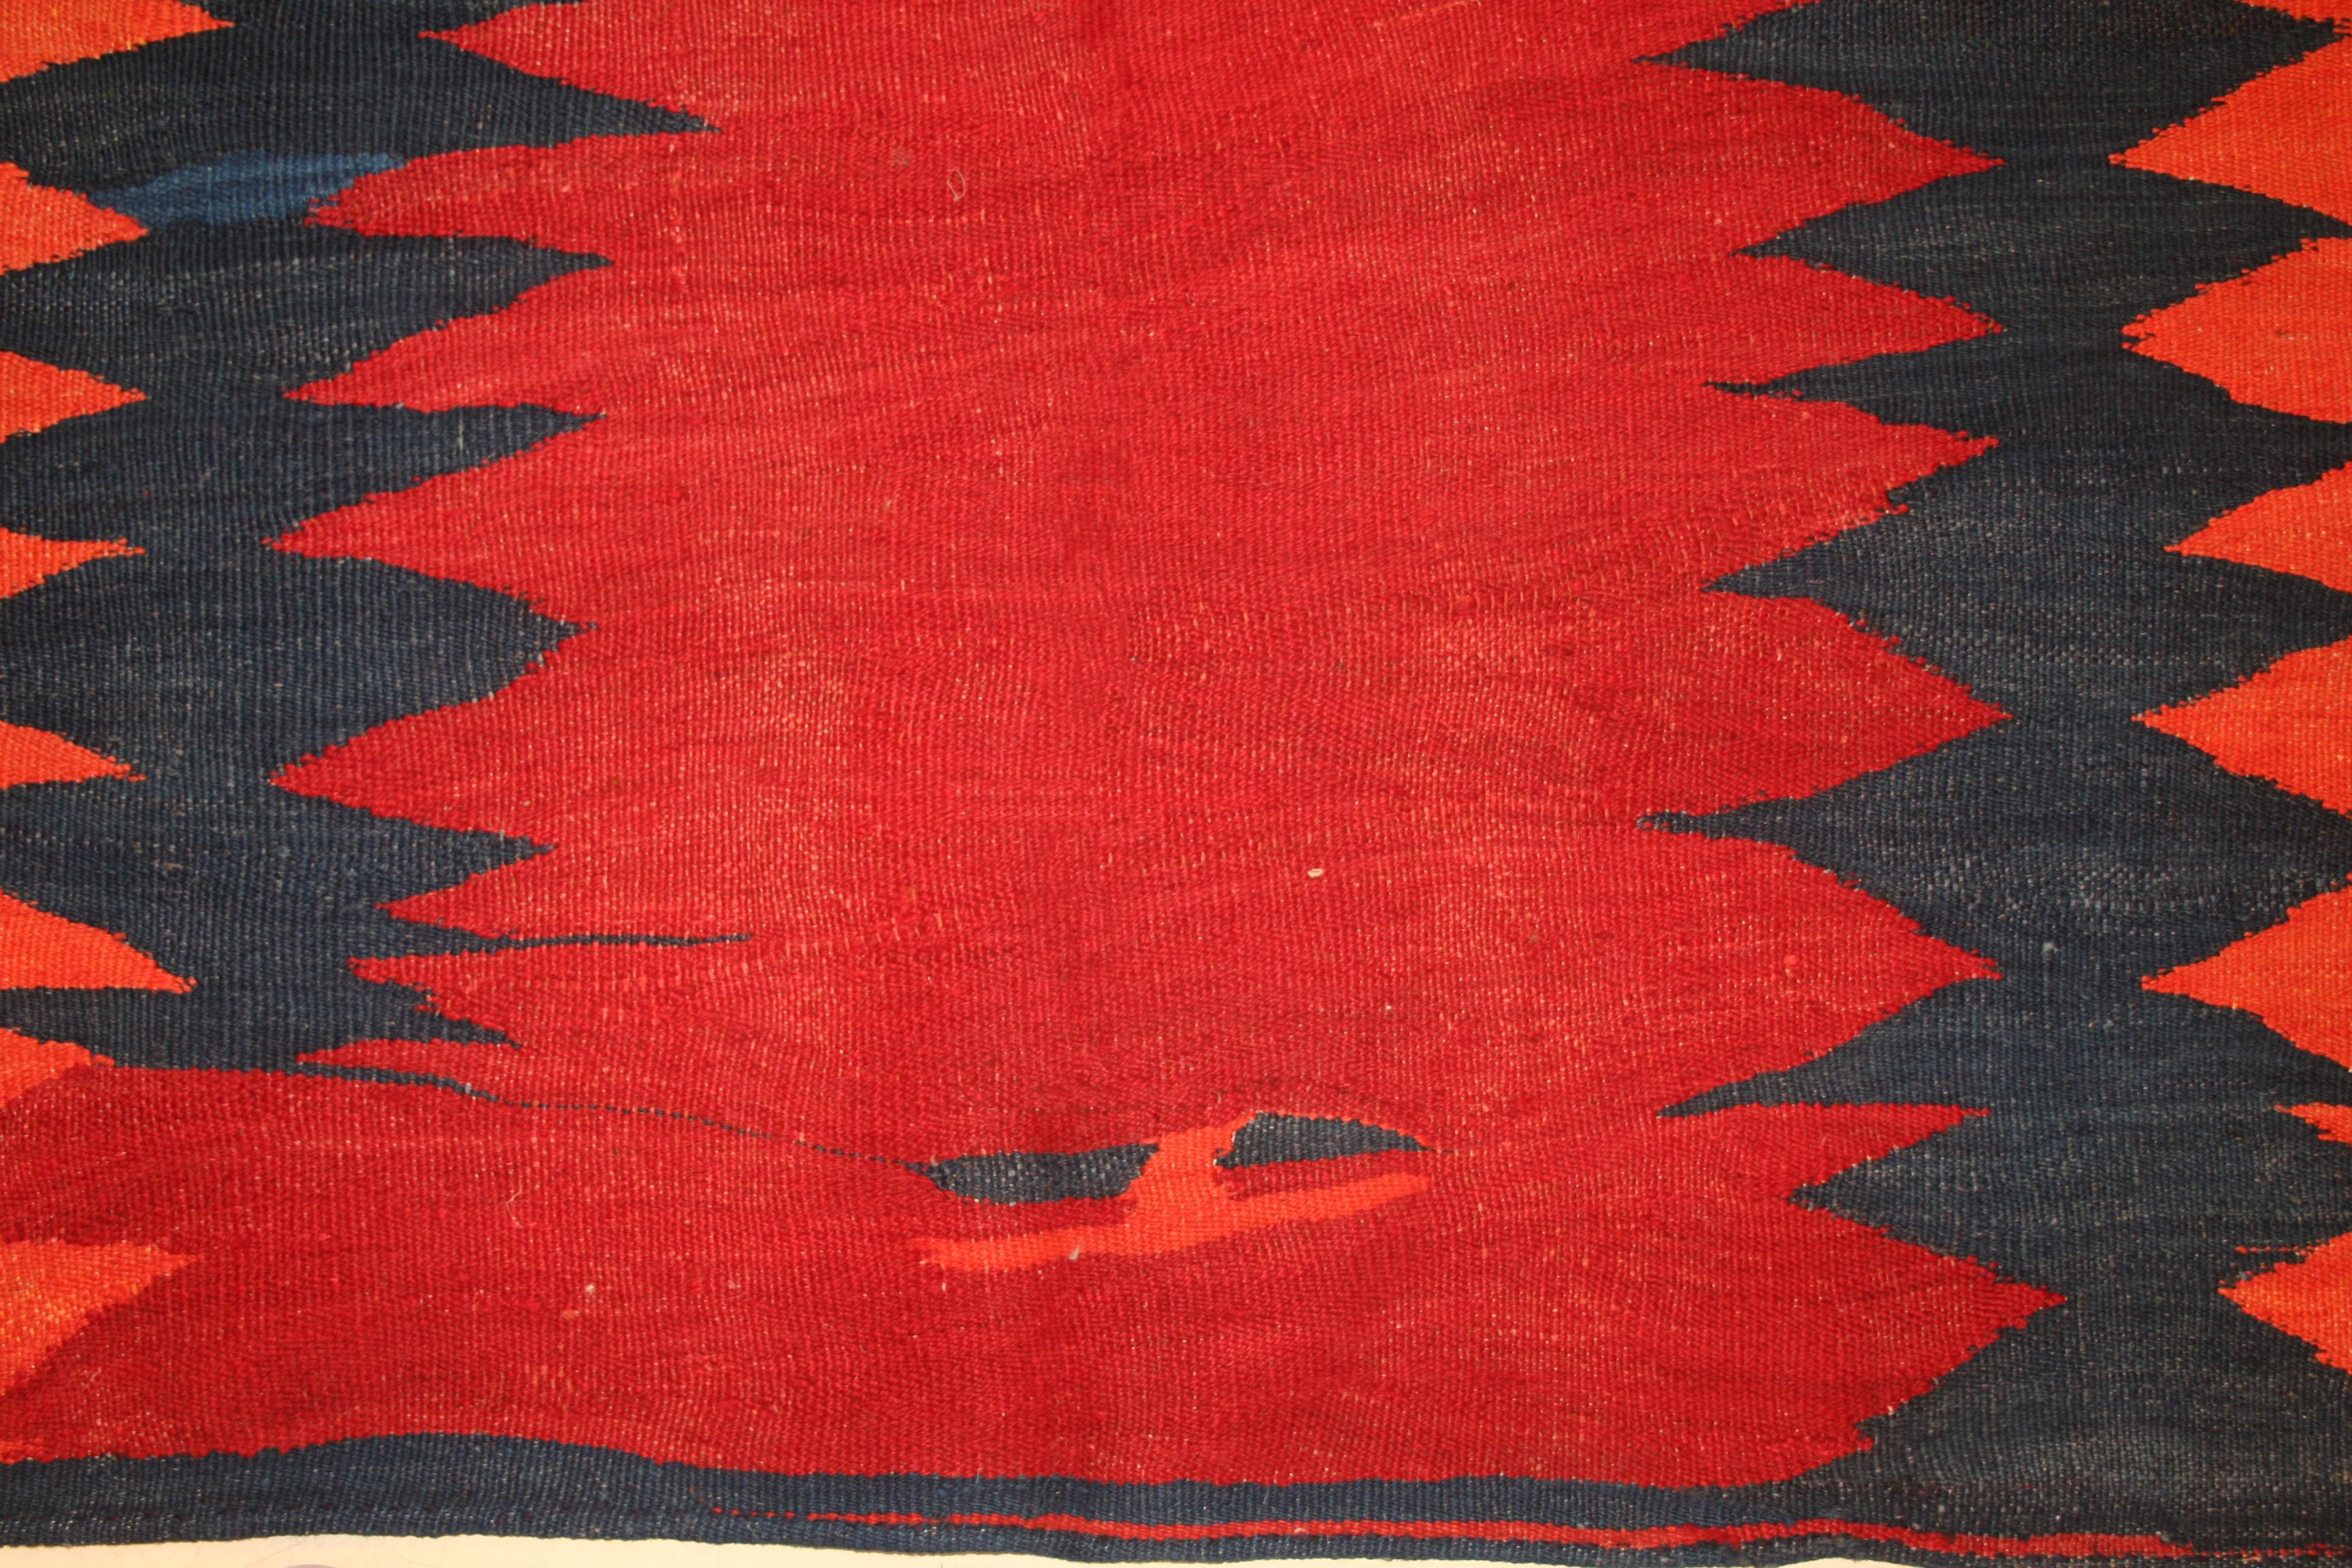 Hand-Woven Vintage Minimalist Graphic Tribal Kilim Rug